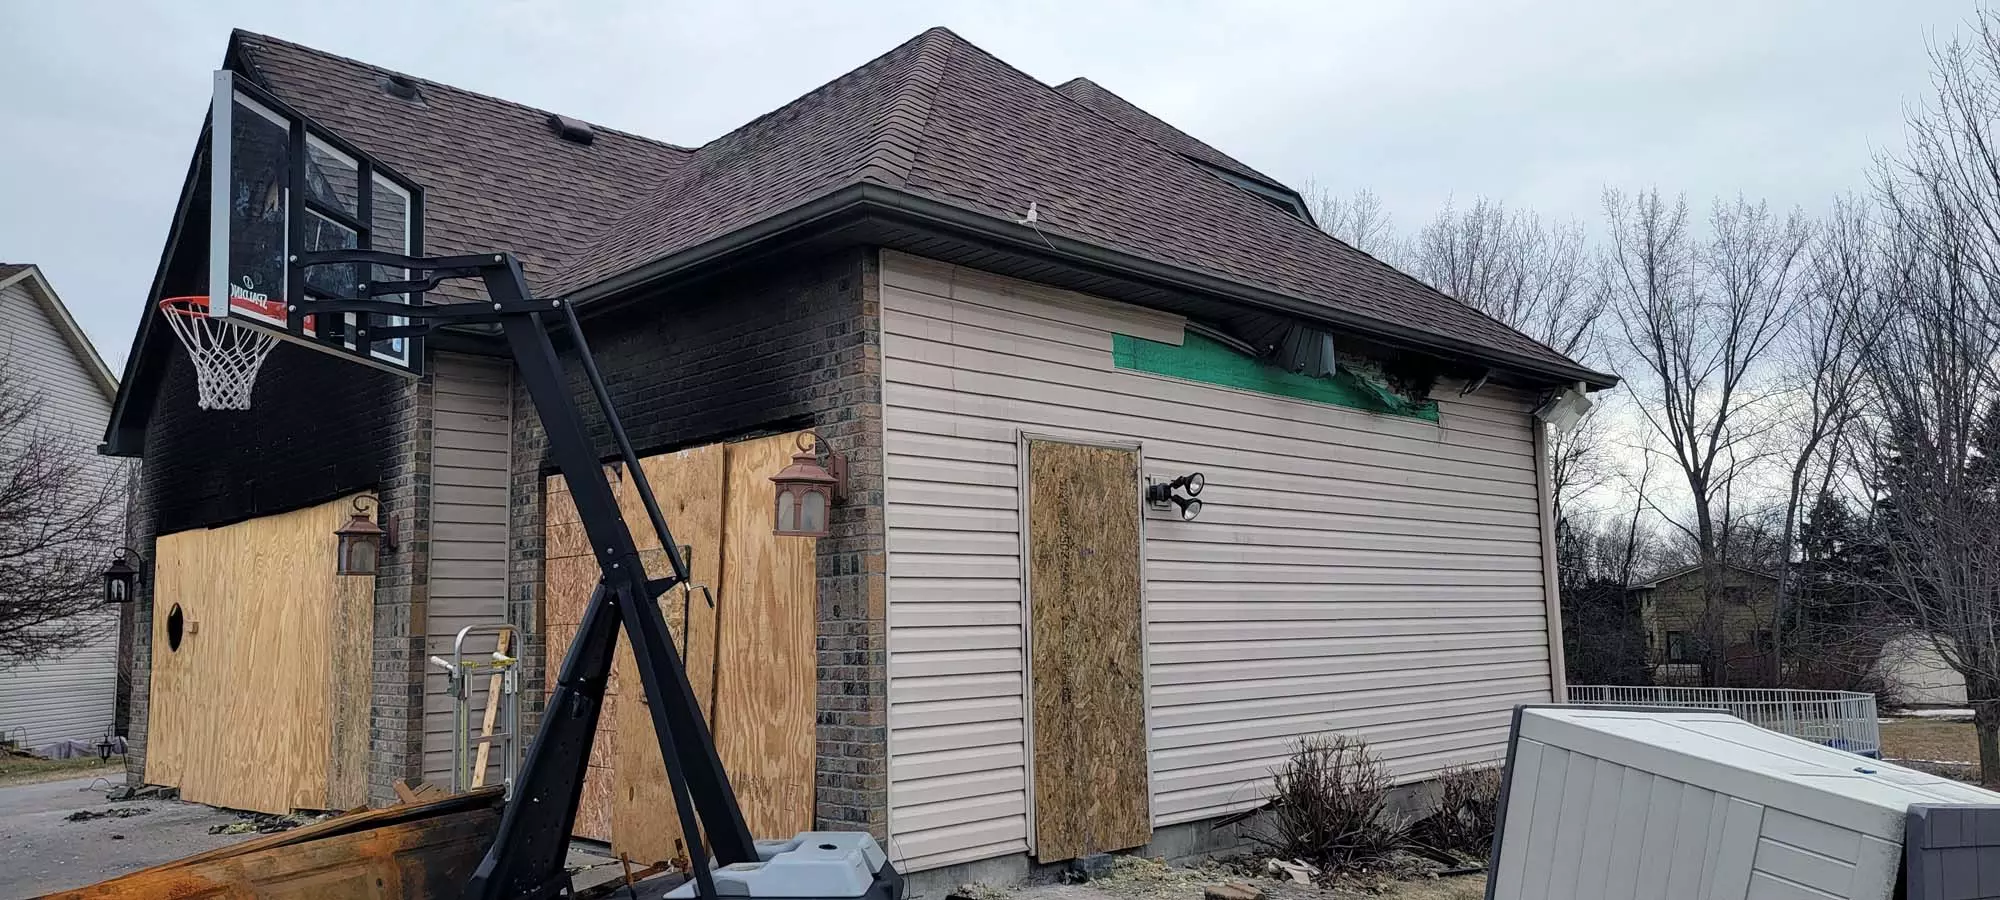 Fire damaged garage exterior soffit and siding damage